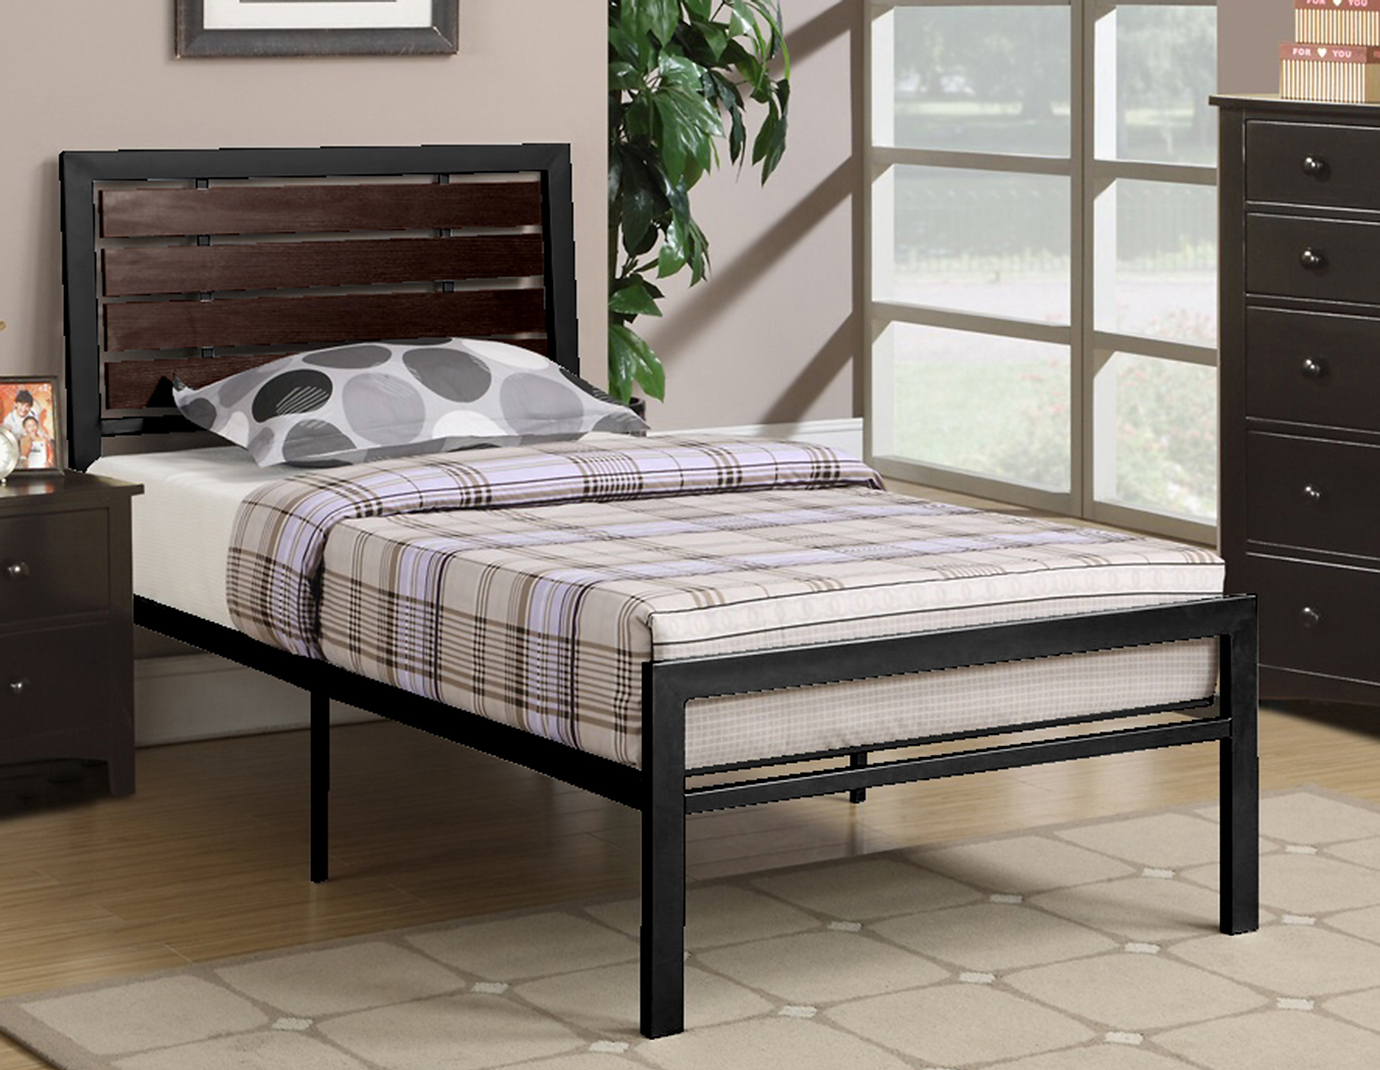 Sleek Modern Metal Bed with Wood Panel Headboard